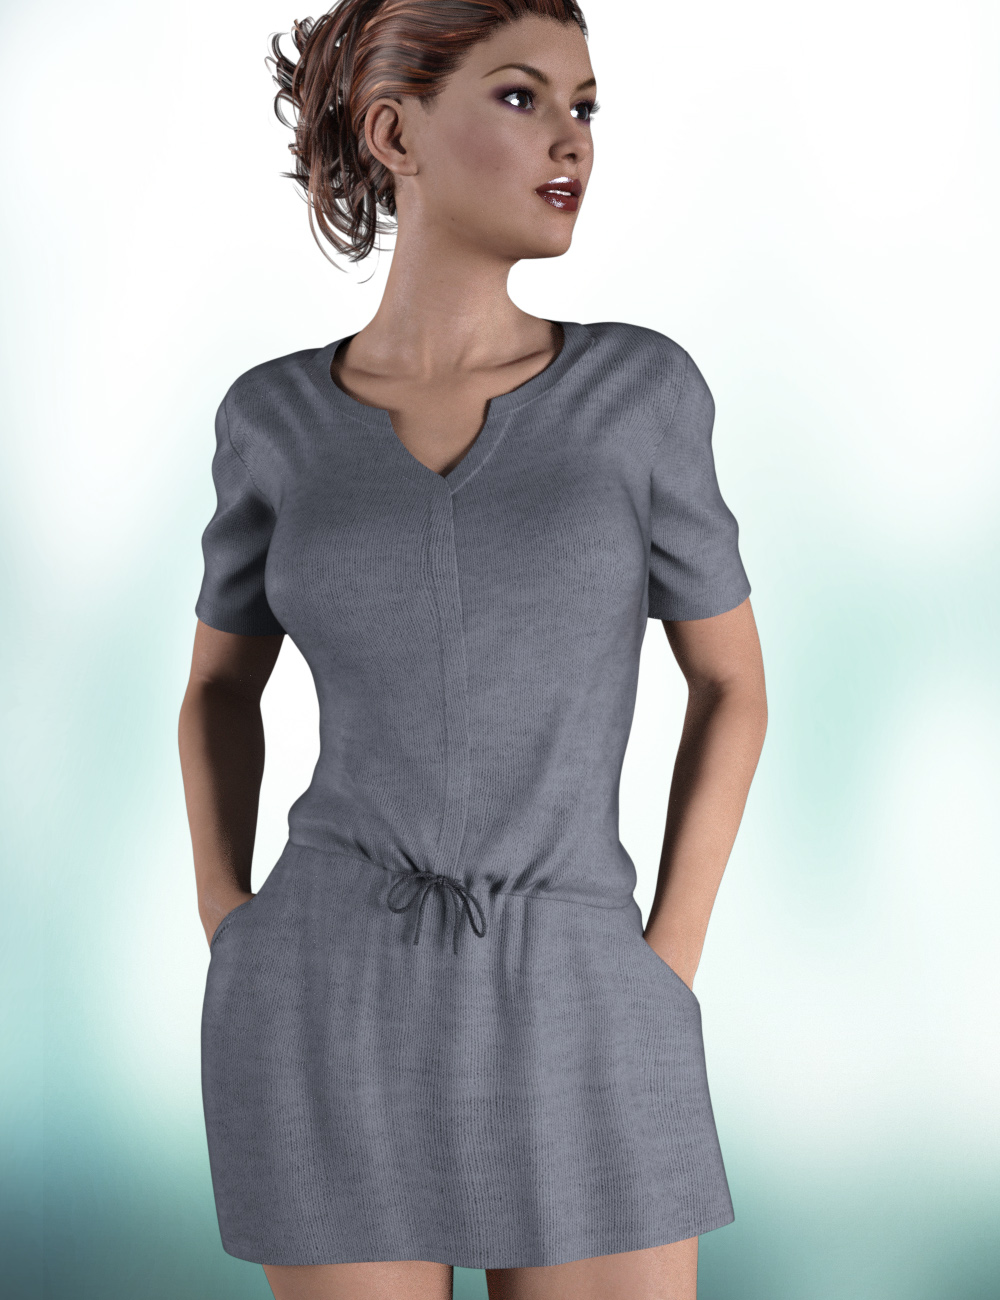 Loose Sweater Dress for Genesis 3 Female(s) by: aurorabreeze, 3D Models by Daz 3D